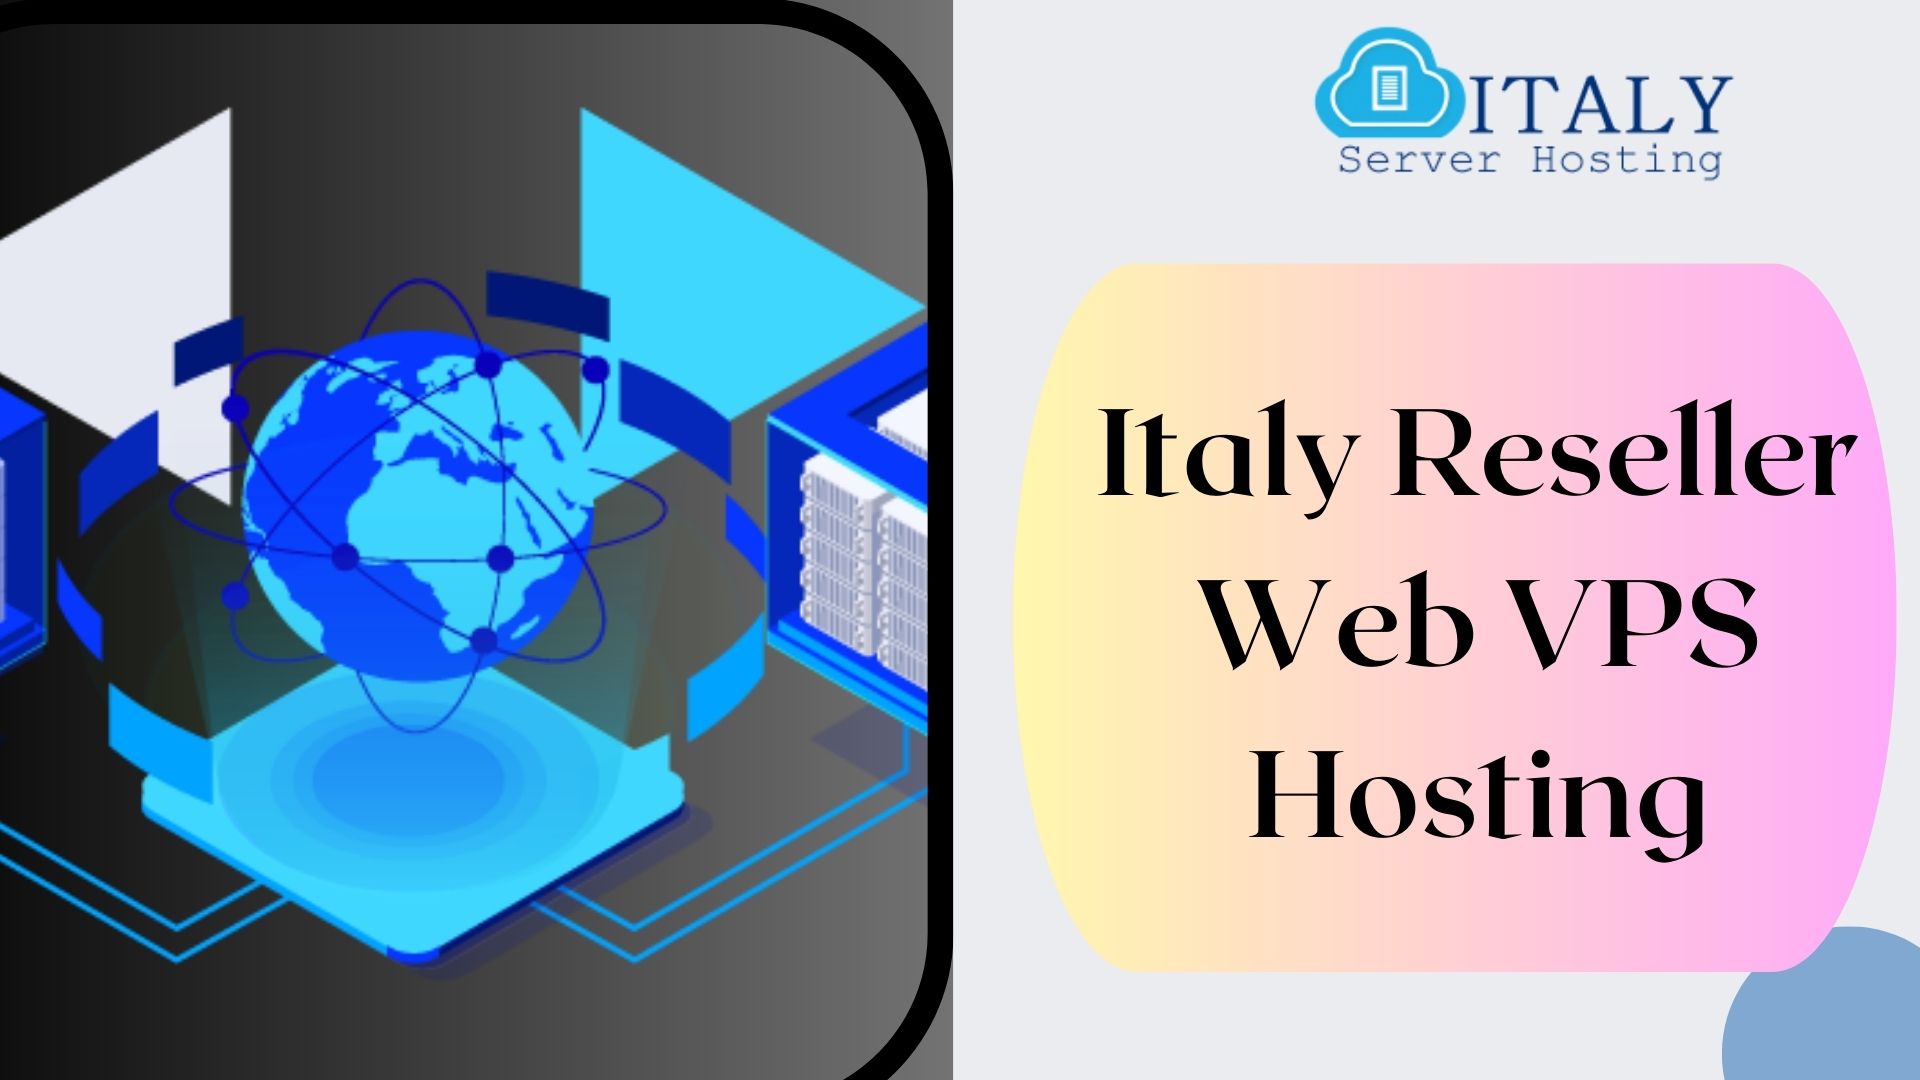 Italy Reseller web VPS hosting